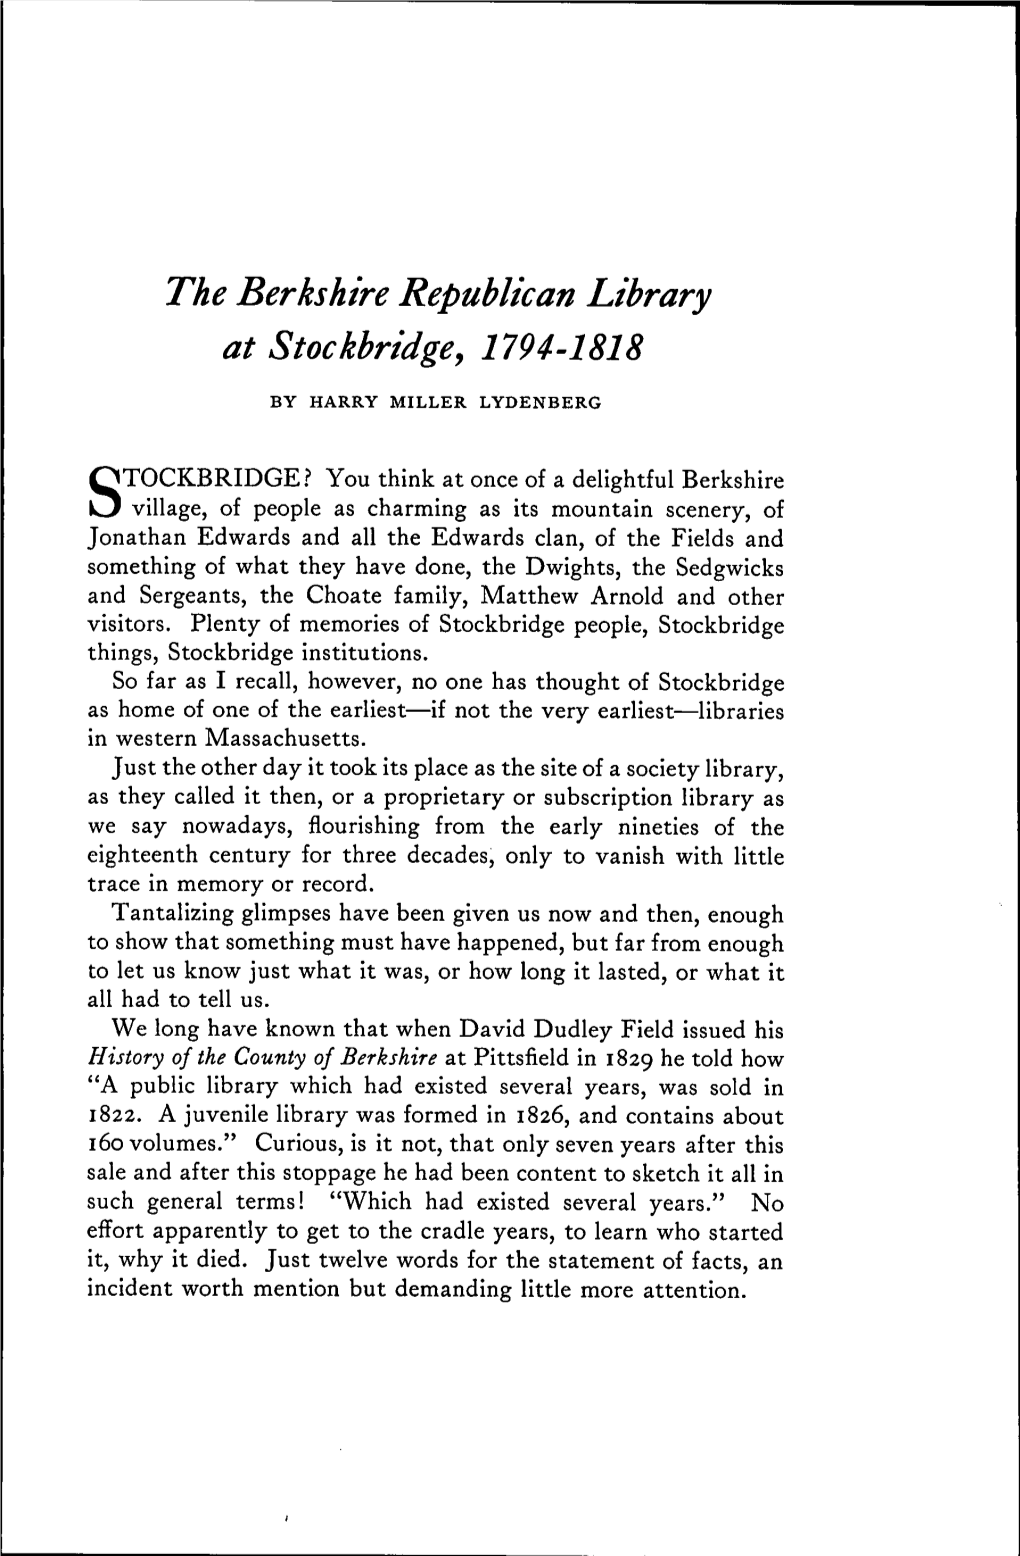 The Berkshire Republican Library at Stockbridge, 1794-1818